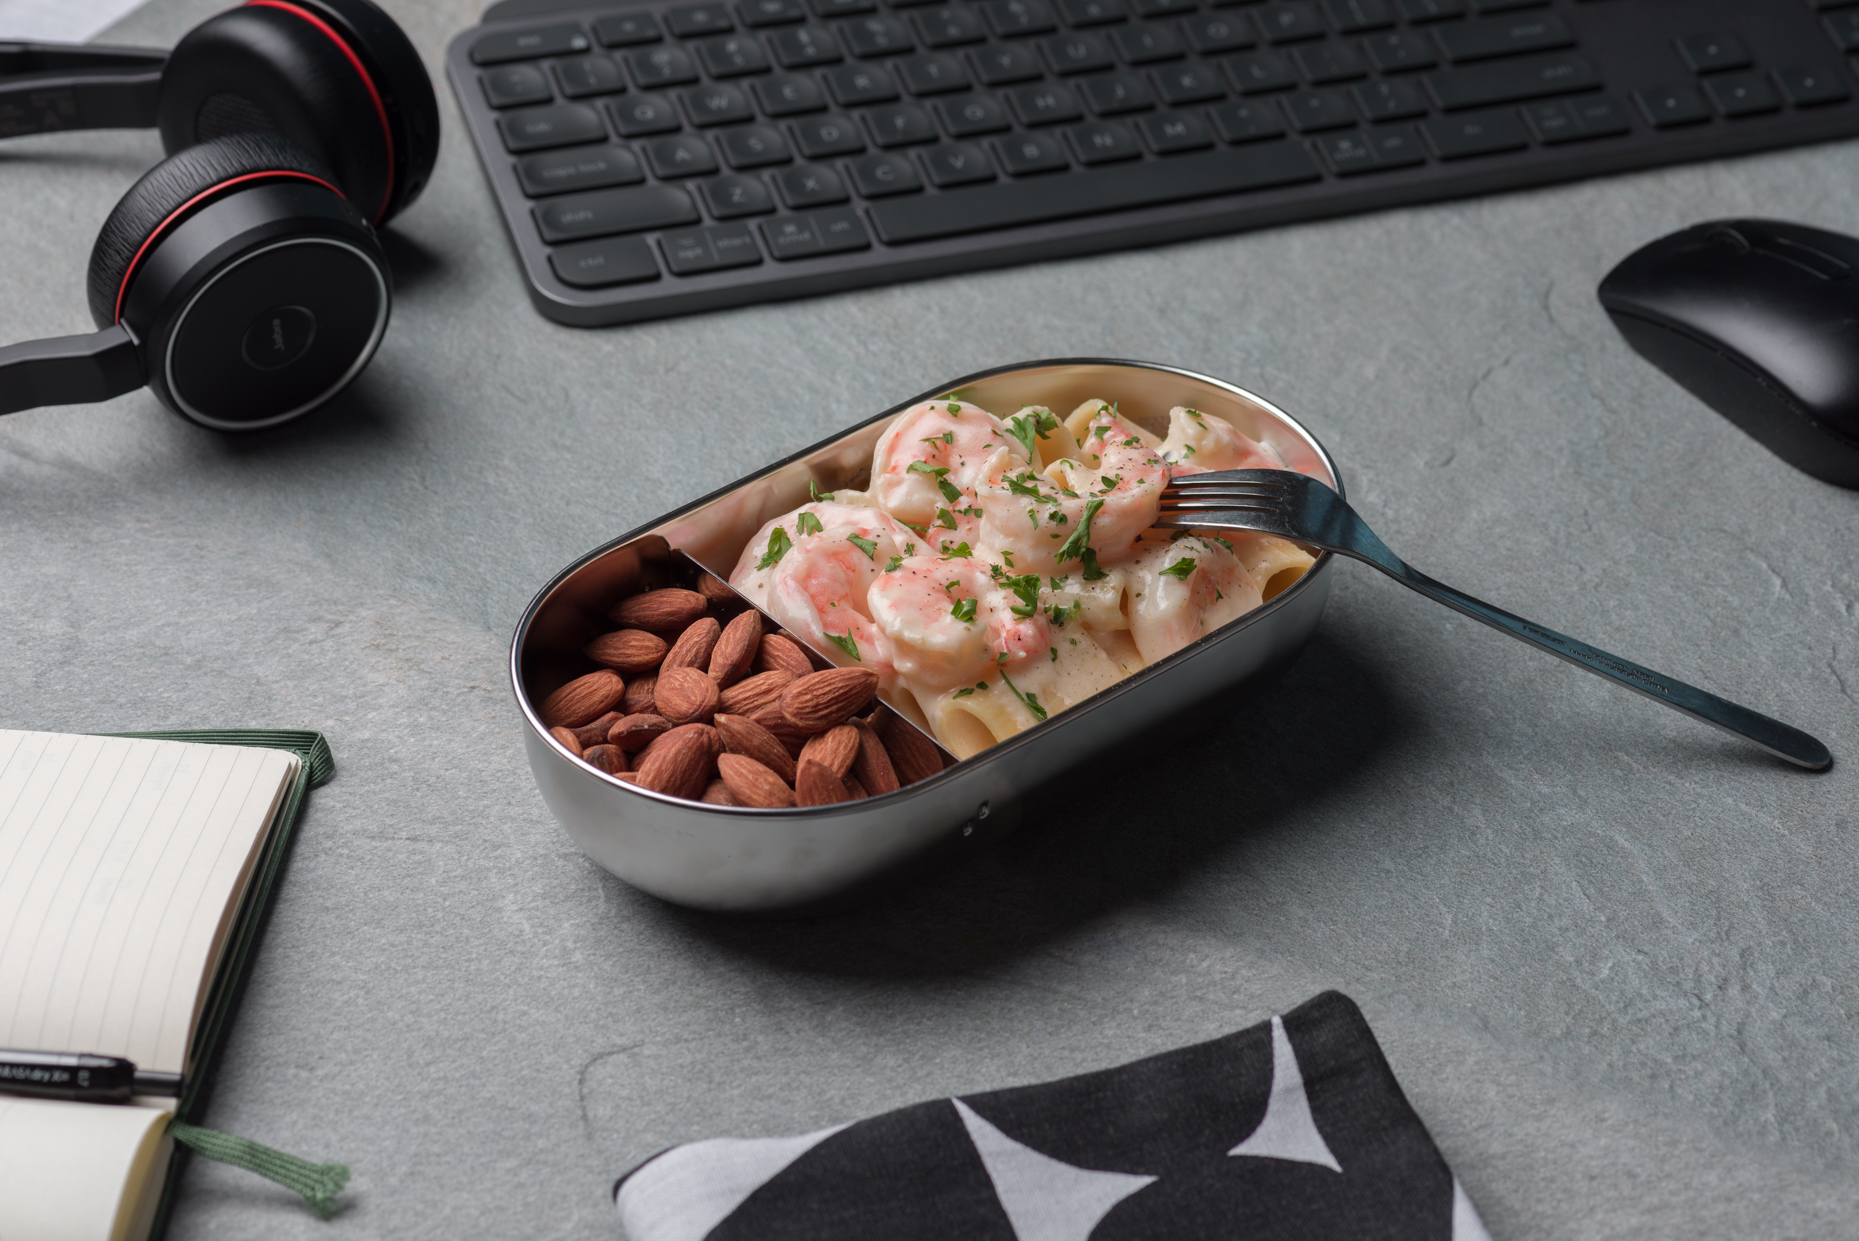 Work-Lunch-Food-Stylist-Photographer-Desk-Computer-Shrimp-Healthy